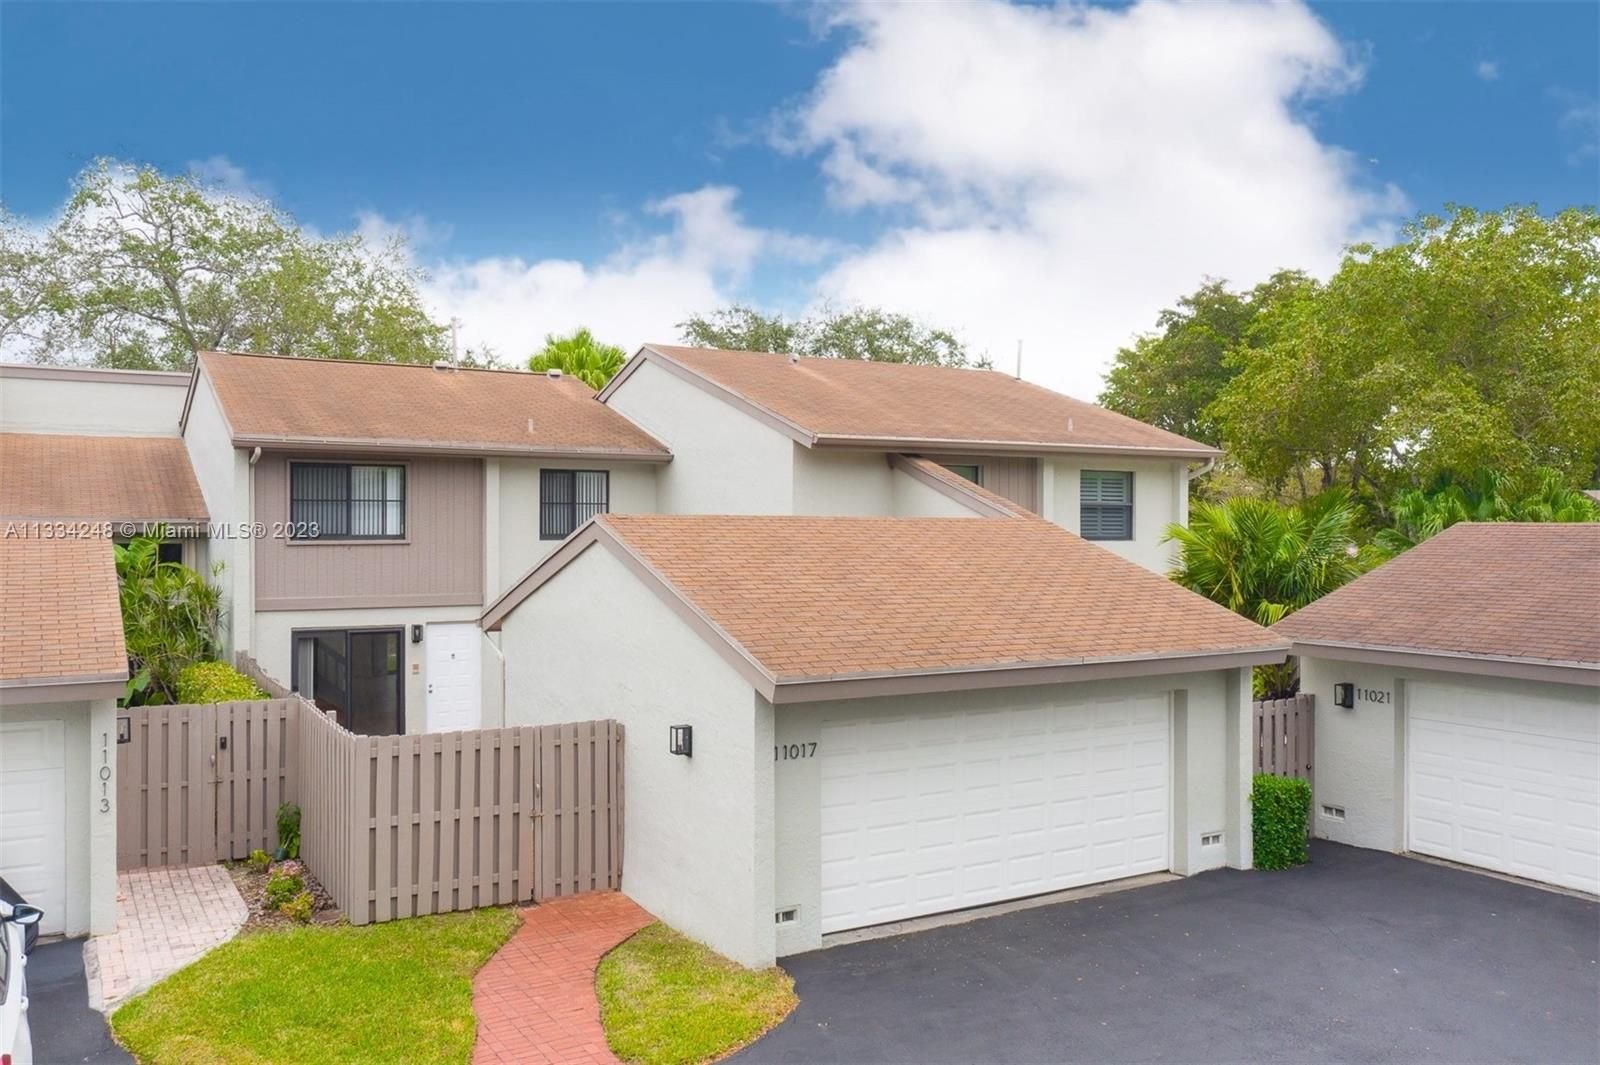 Real estate property located at 11017 113th Pl #11017, Miami-Dade County, Miami, FL